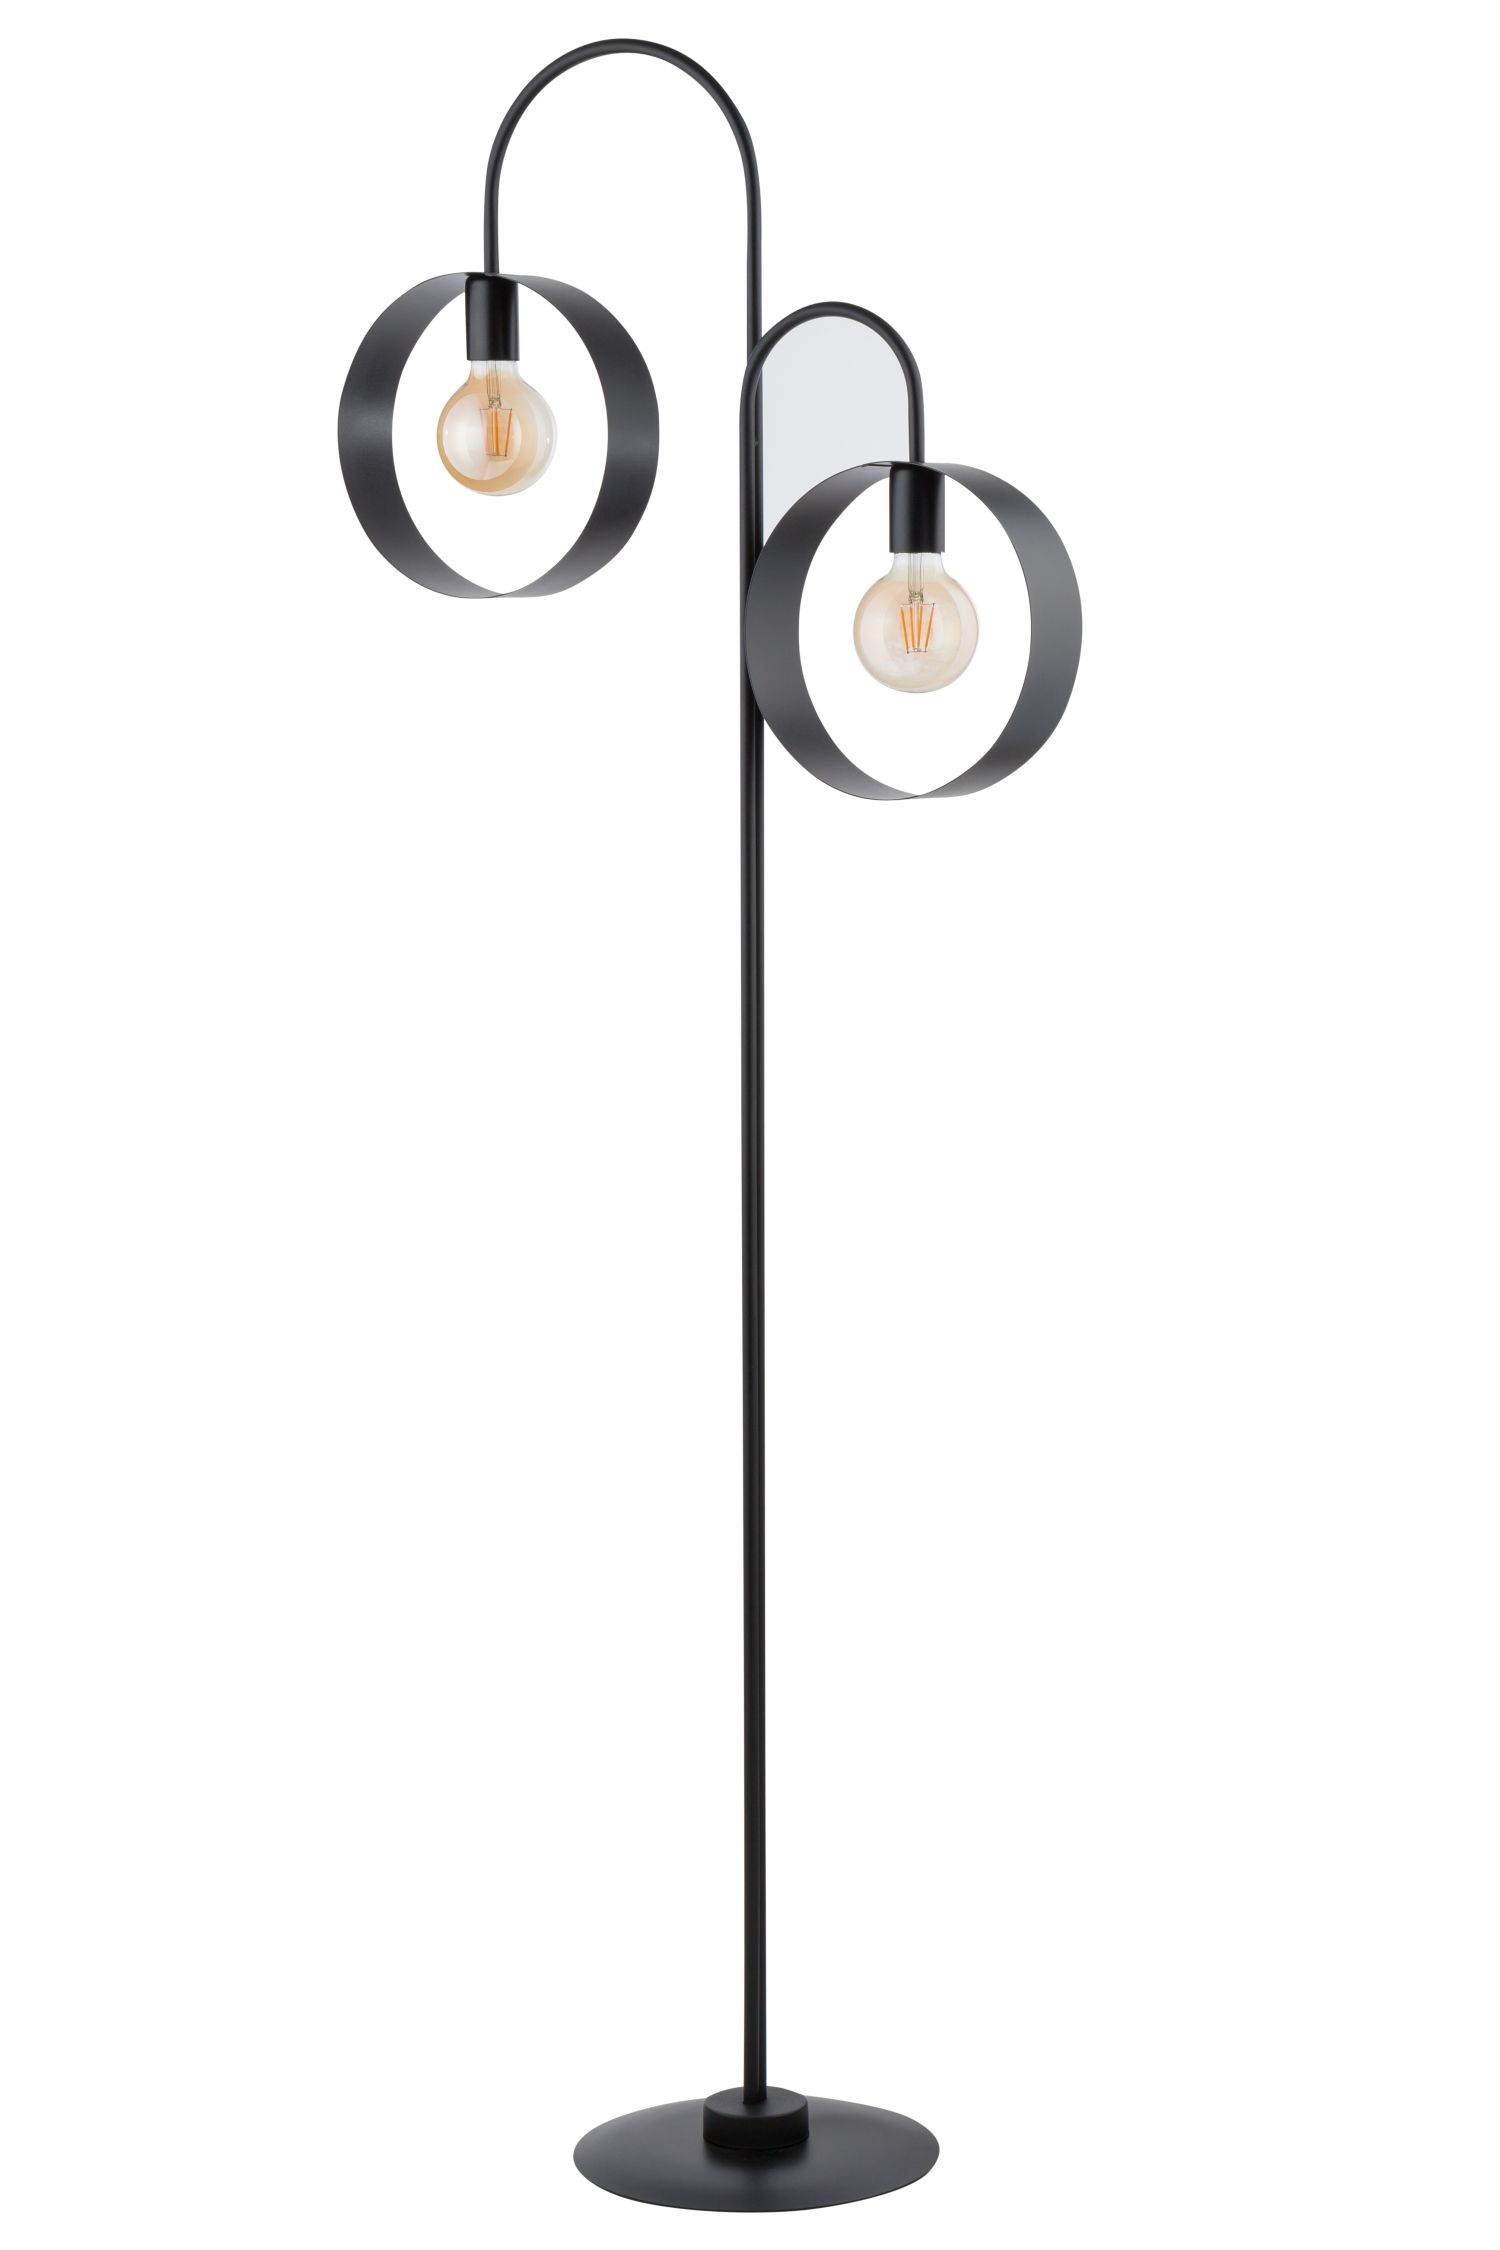 Große Stehlampe Metall Schwarz Ringe 164 cm stilvoll